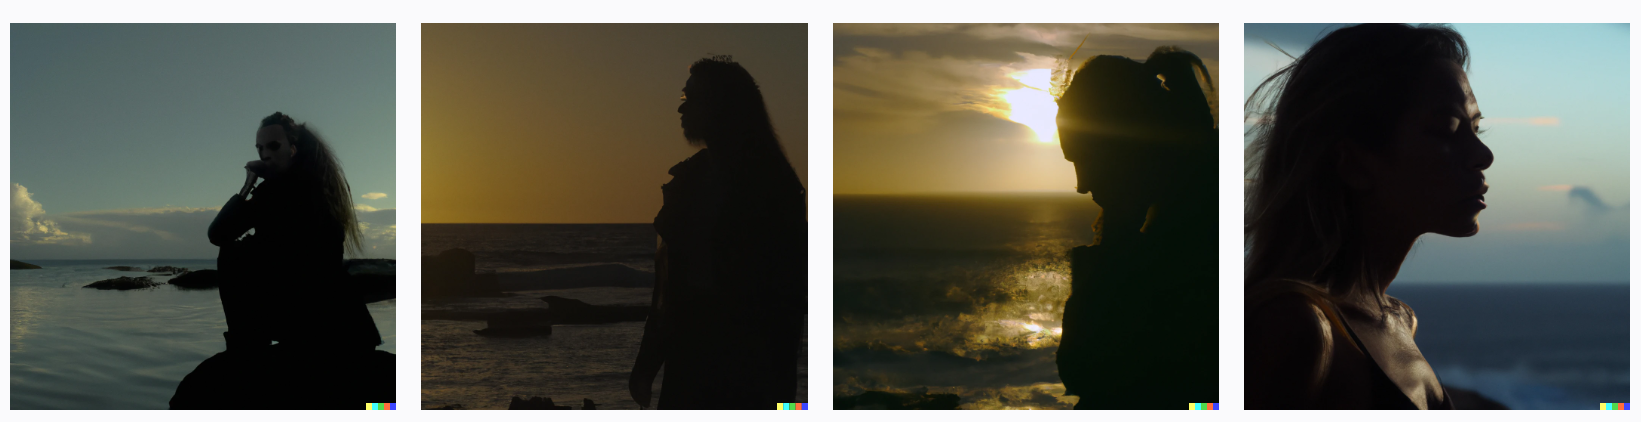 Woman on ocean coastline, sunset backgorund, dark and moody, desperate, grim, shadows, H.R. Giger style, photorealistic 8k